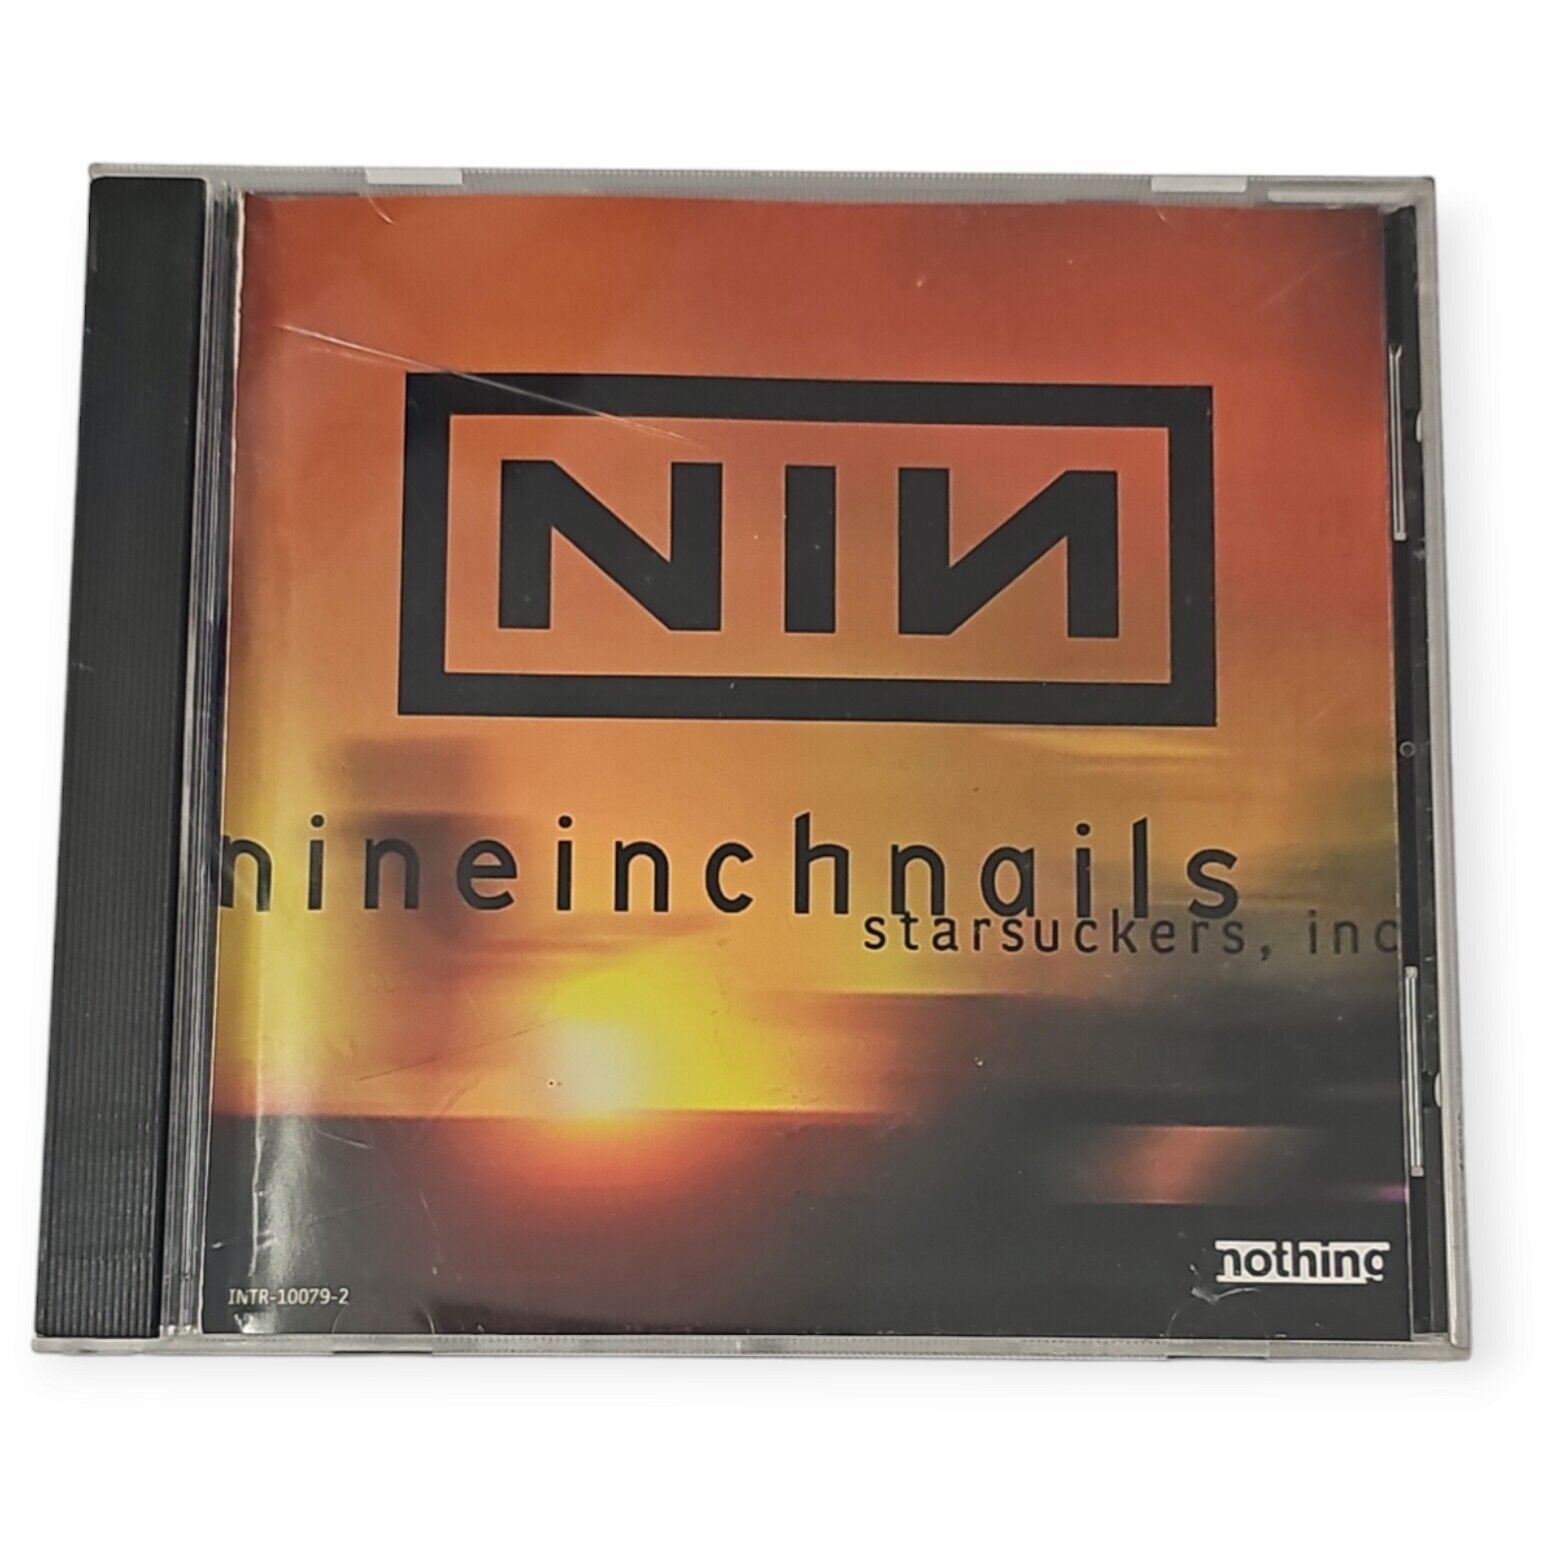 Nine Inch Nails – Starsuckers, Inc. [2000 Promotional CD Single]